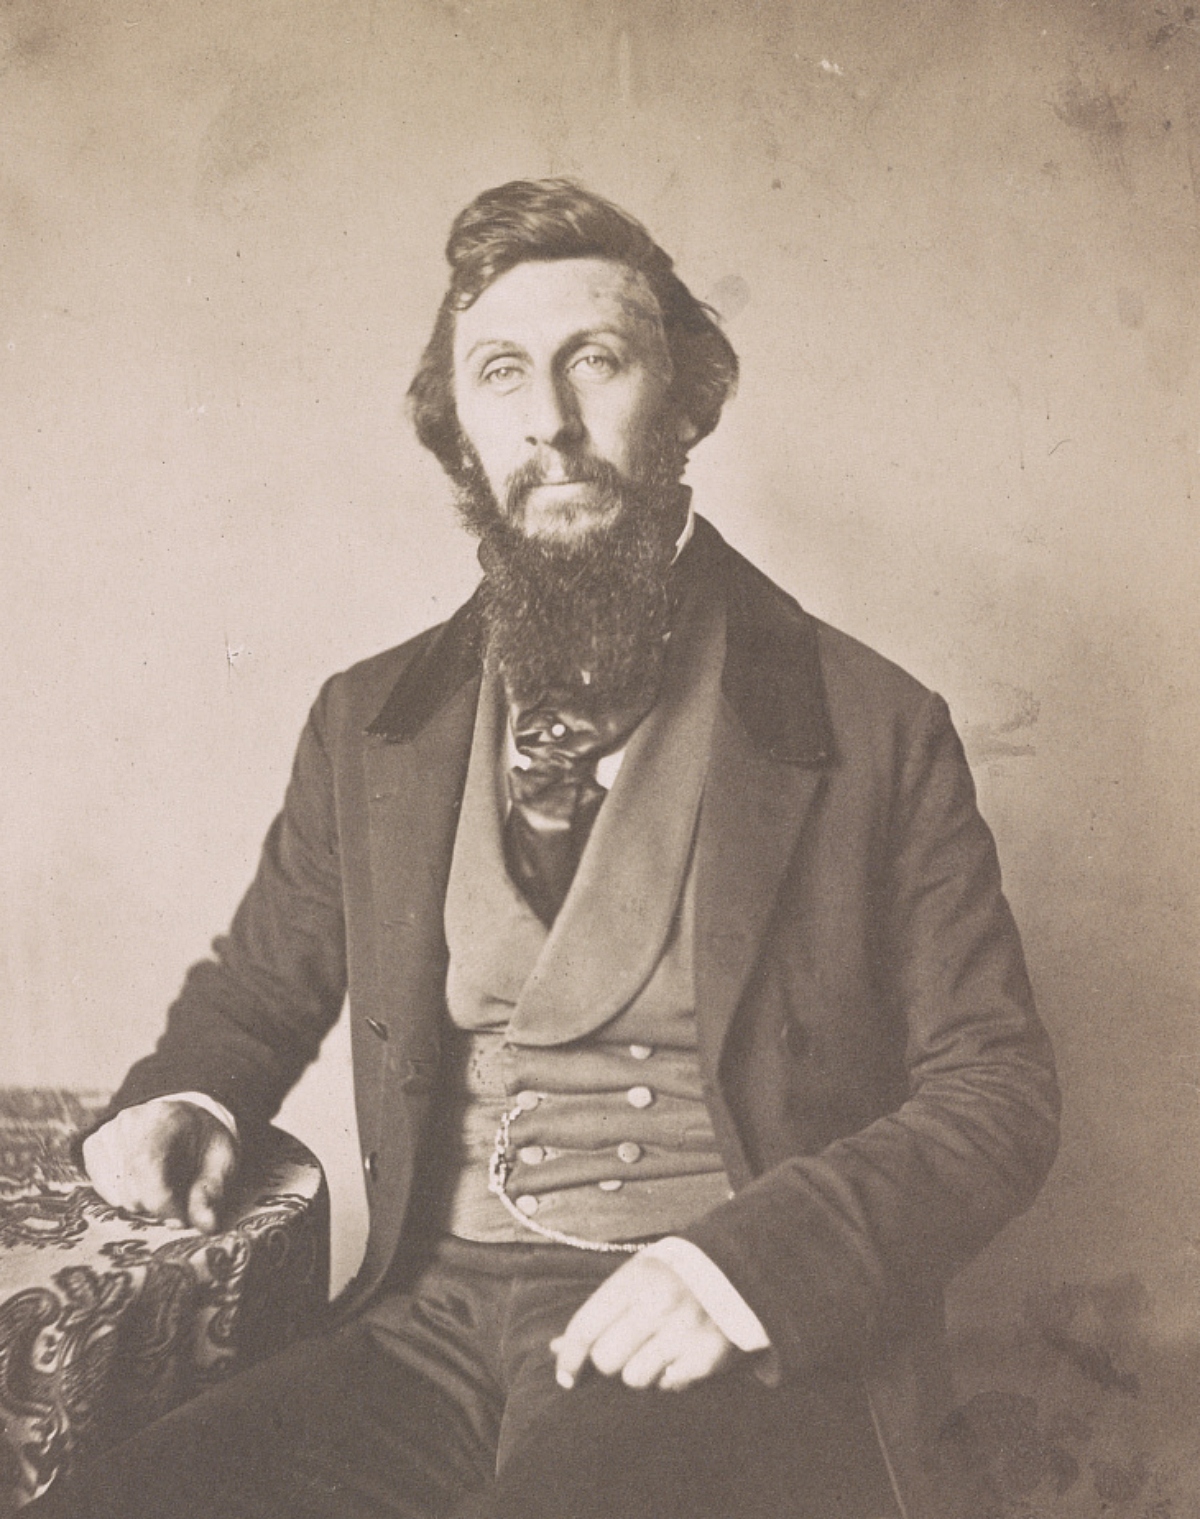 1850s man with full beard